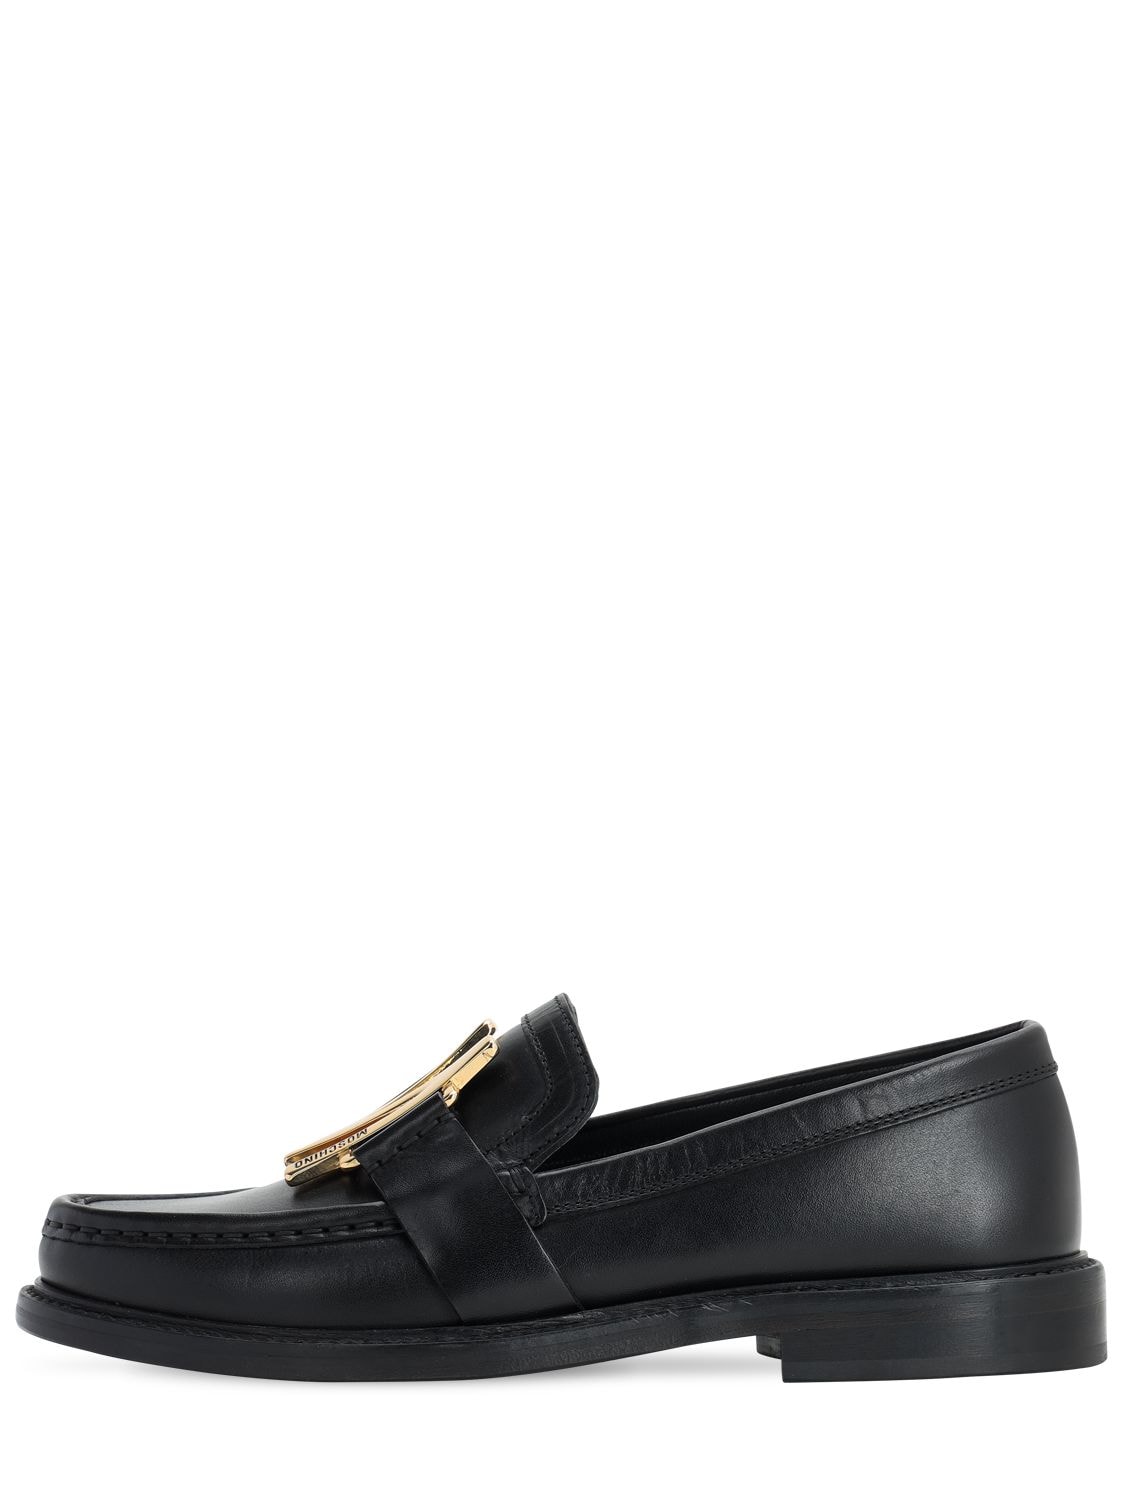 Moschino - 25mm leather loafers - Black | Luisaviaroma